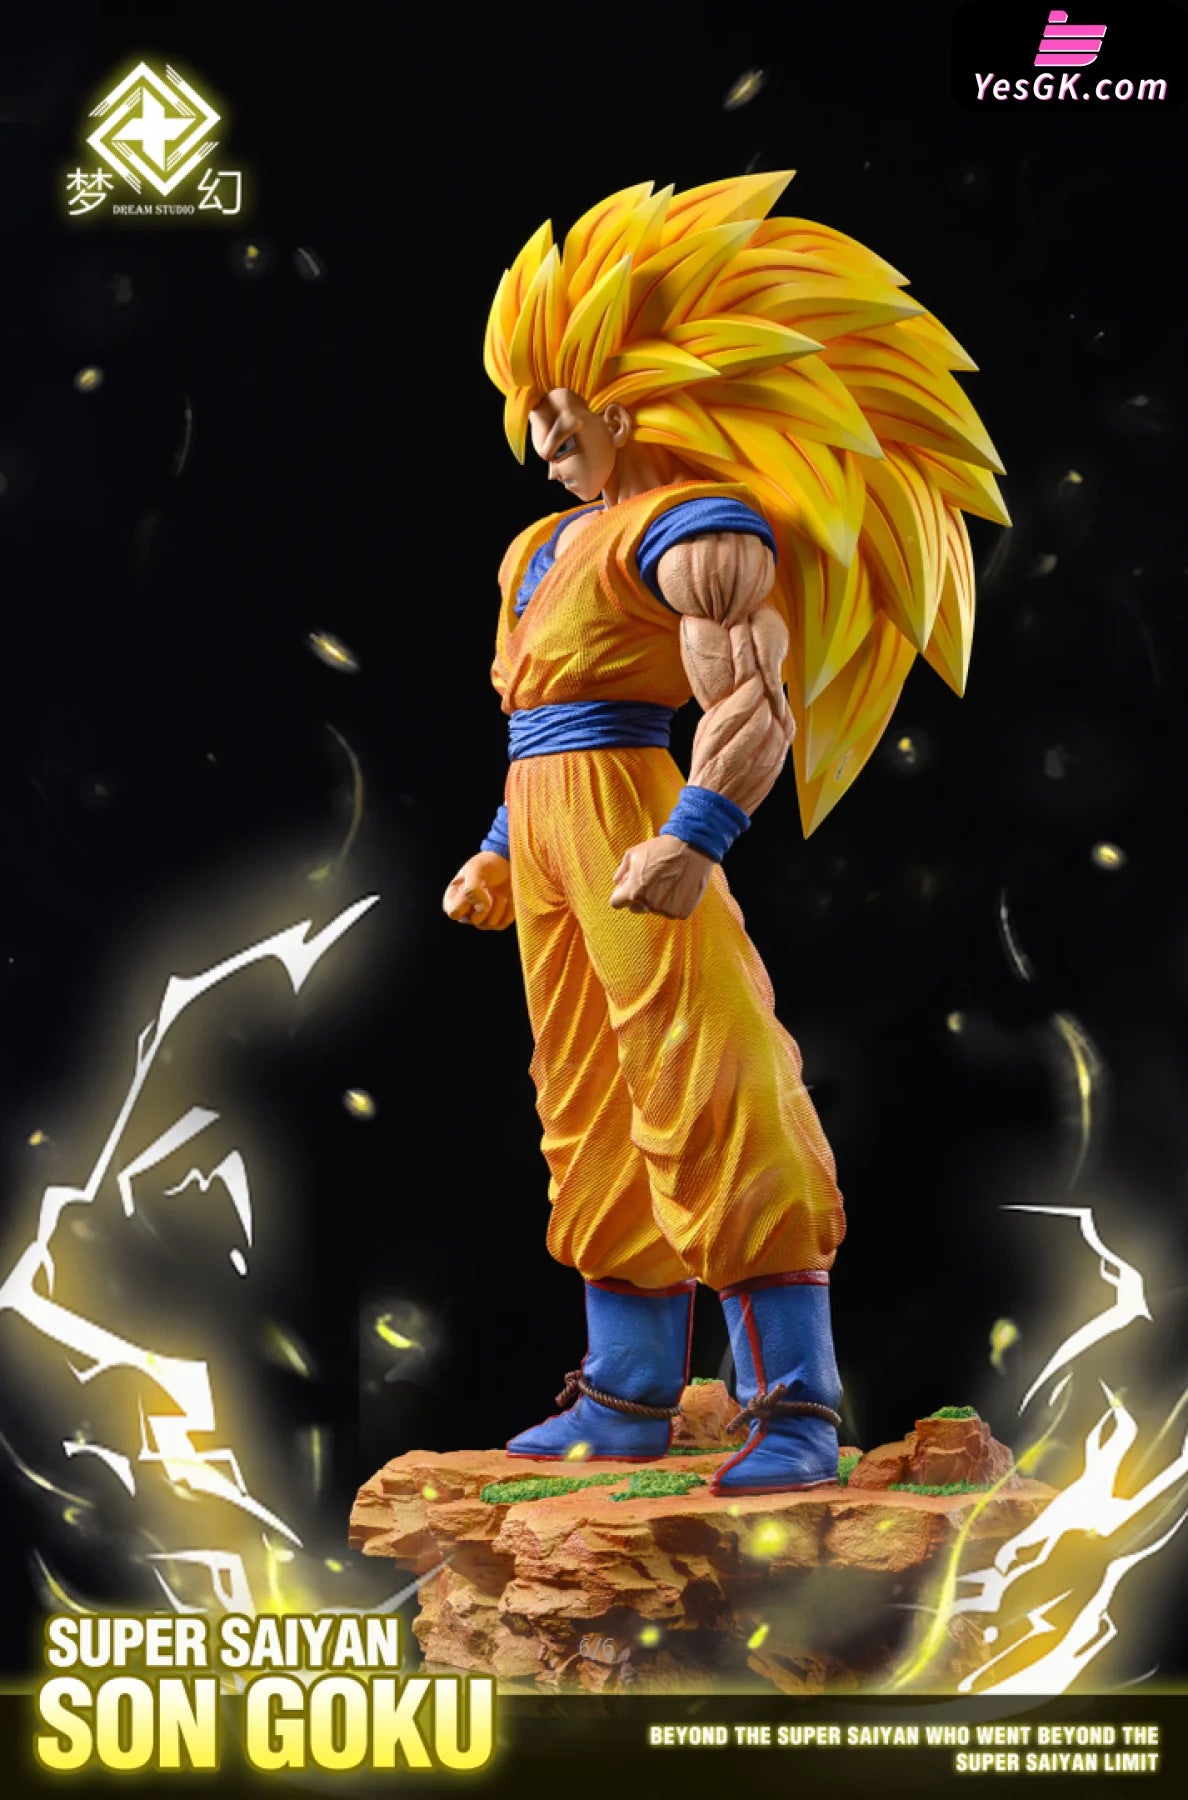 VV Studio Dragon Ball Z Super saiyan 3 Son Goku Statue